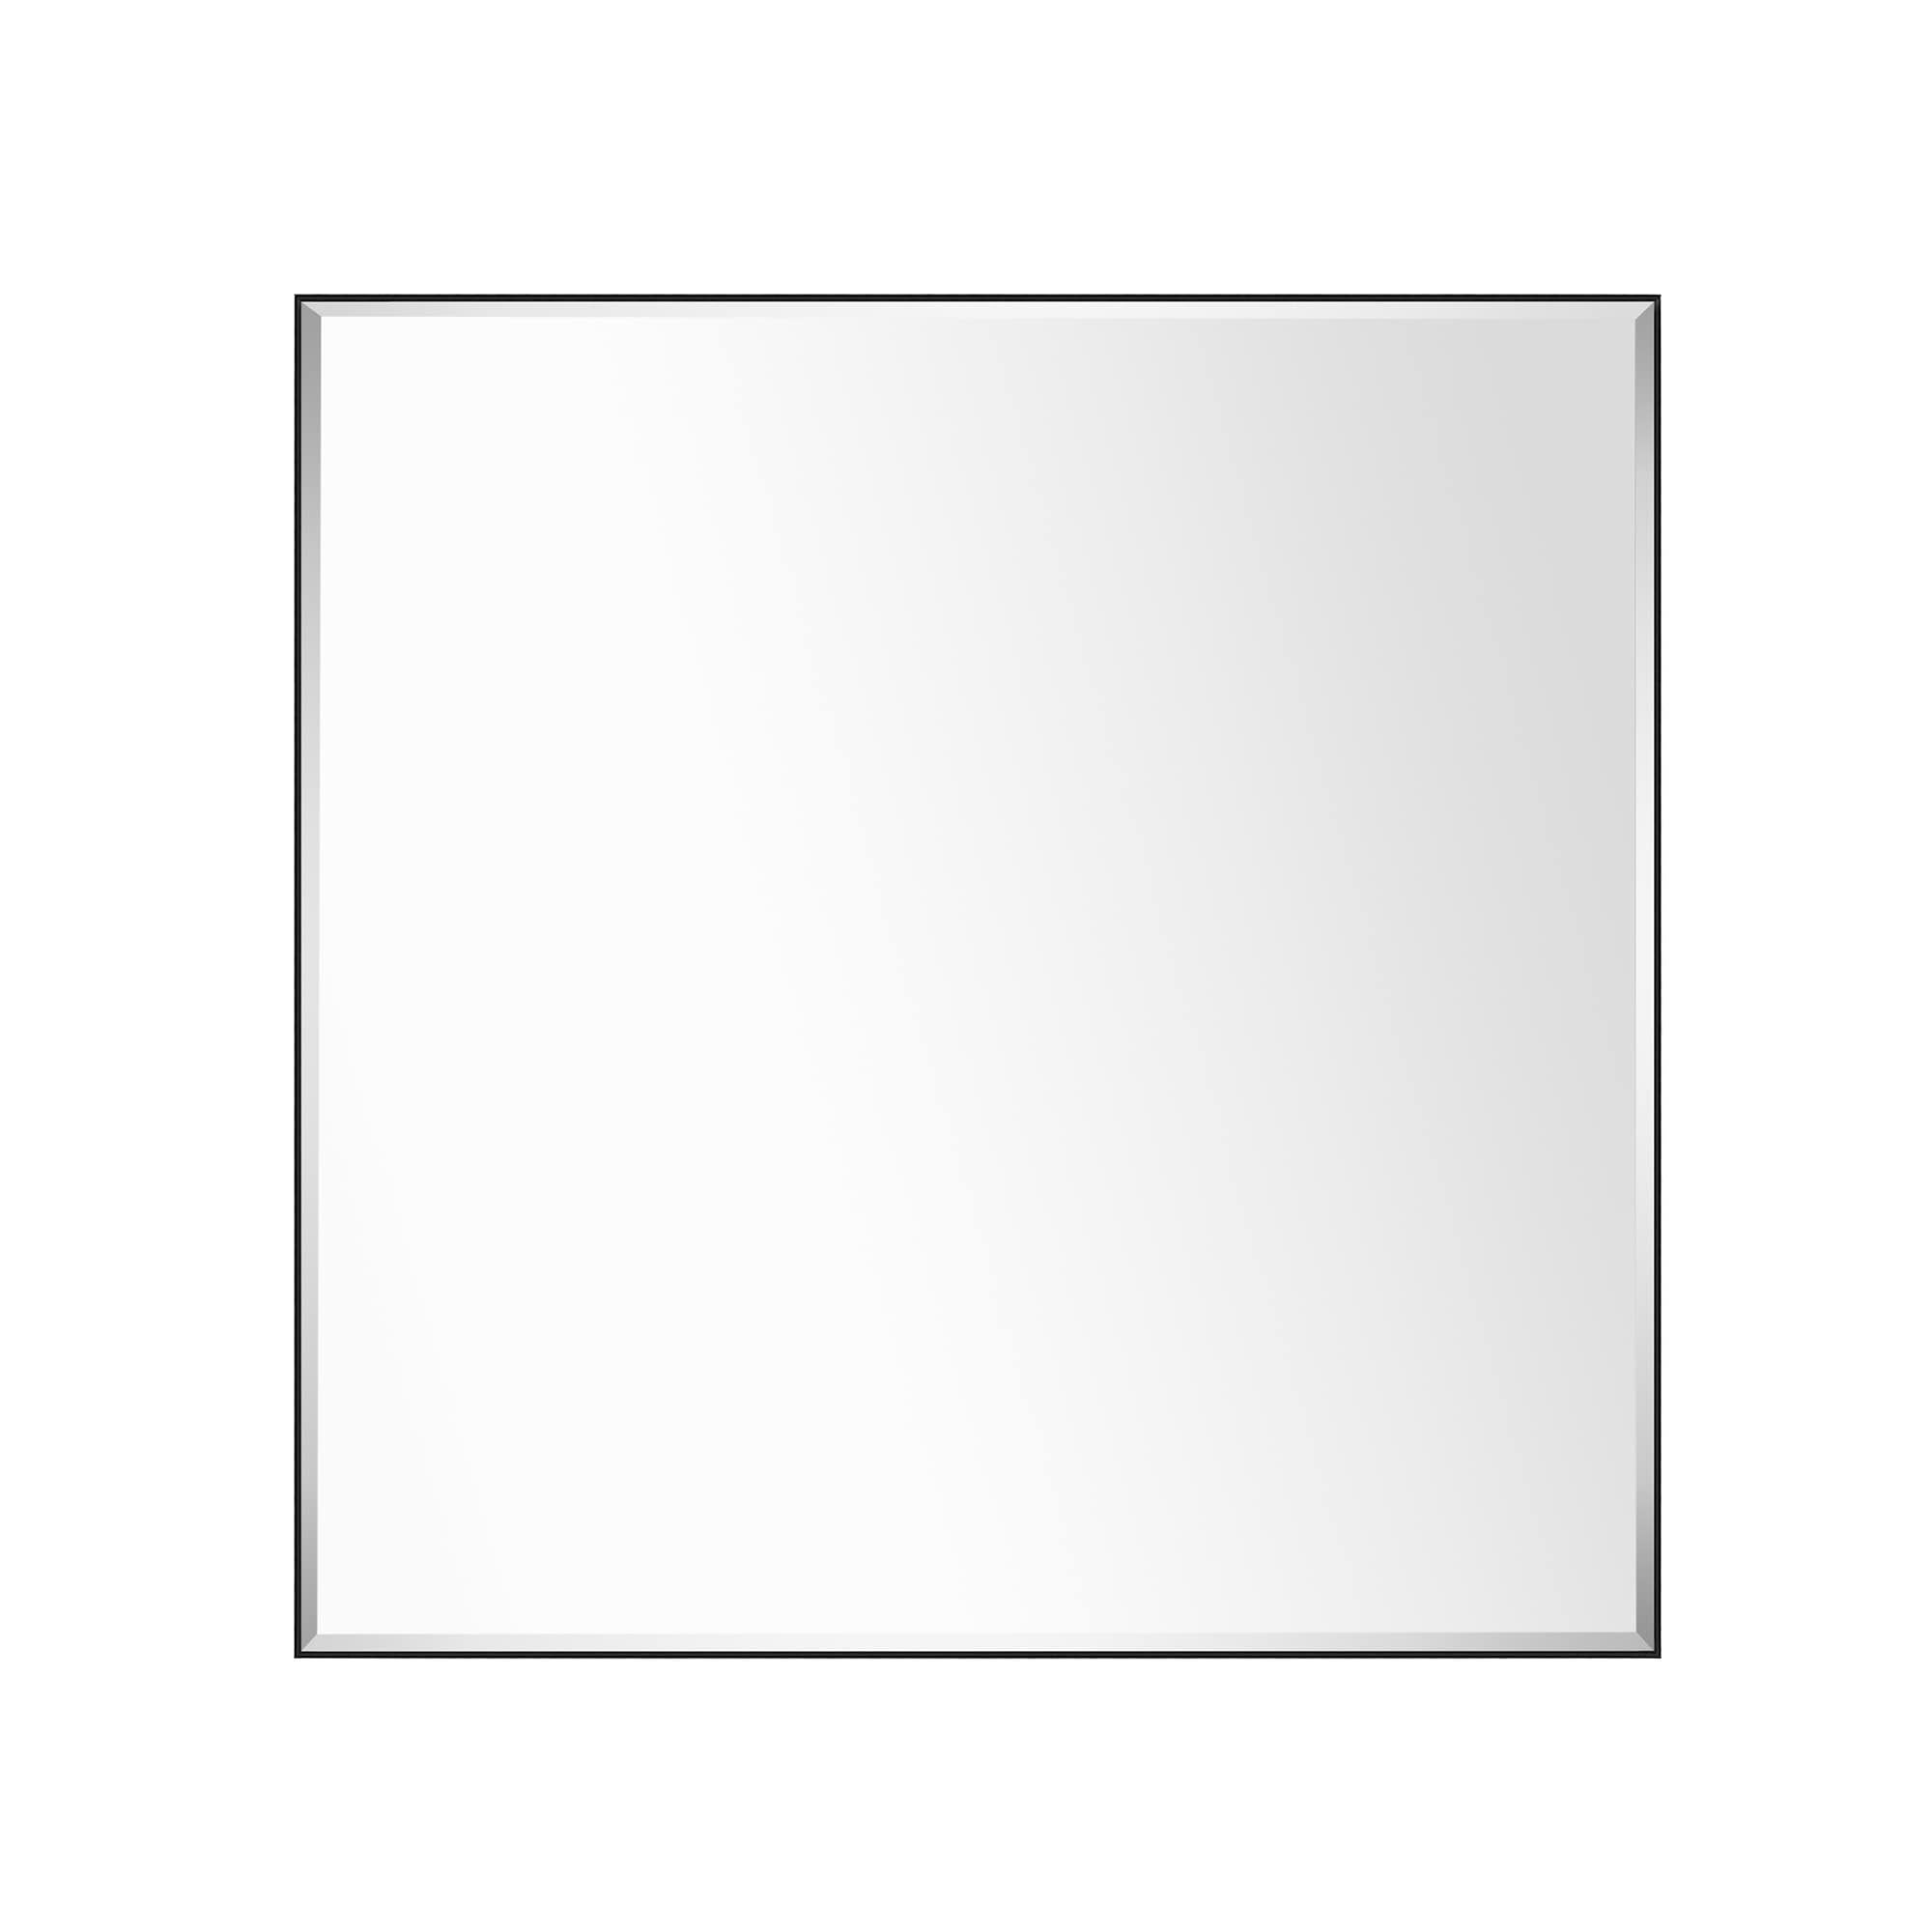 GETLEDEL 36-in x 36-in Black Square Framed Tilting Bathroom Vanity ...